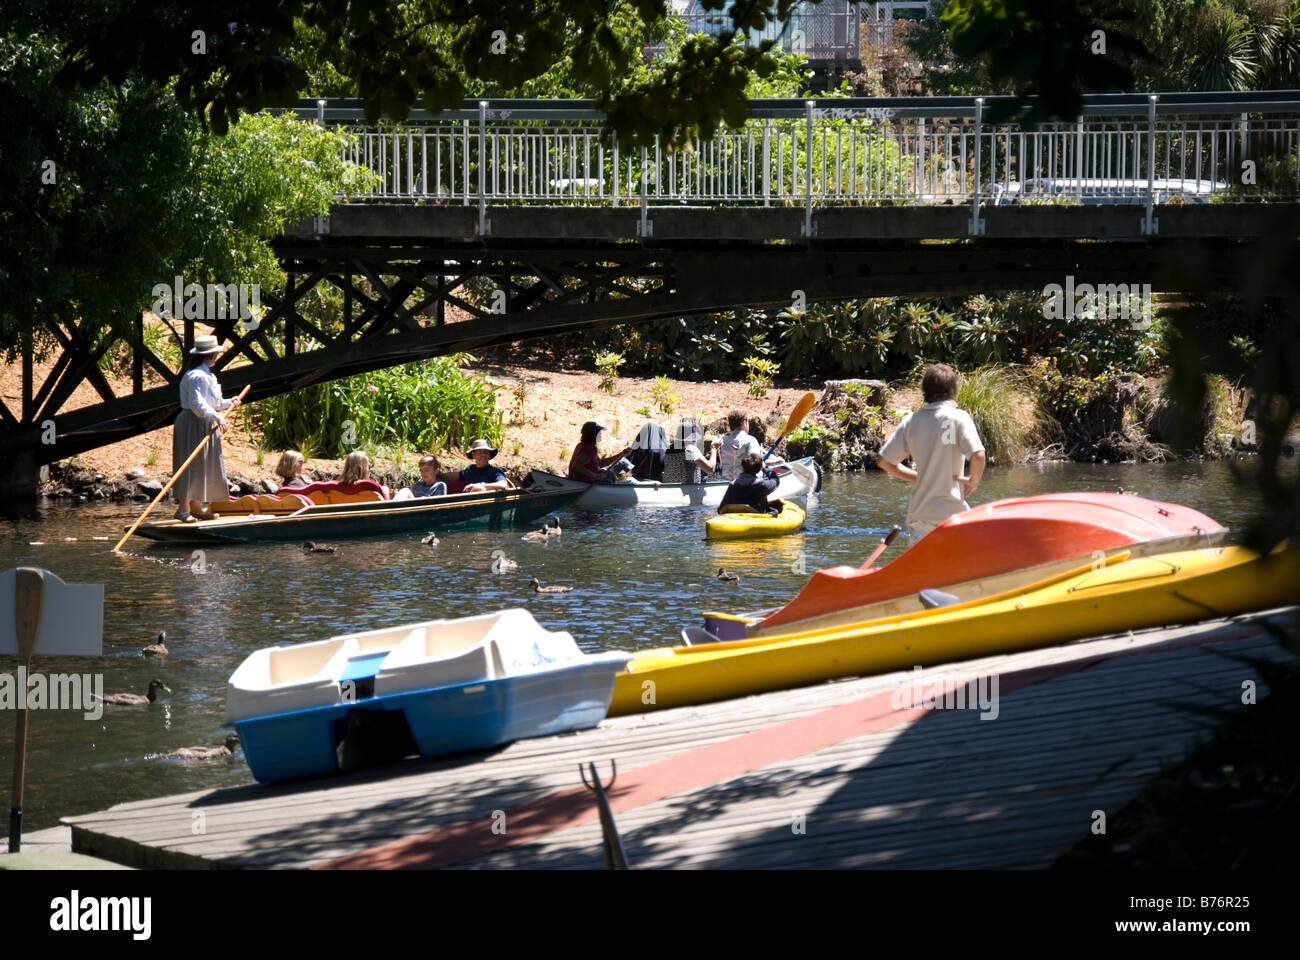 Boating on Avon River, Antigua Boatsheds, Cambridge Terrace, Christchurch, Canterbury, New Zealand Stock Photo